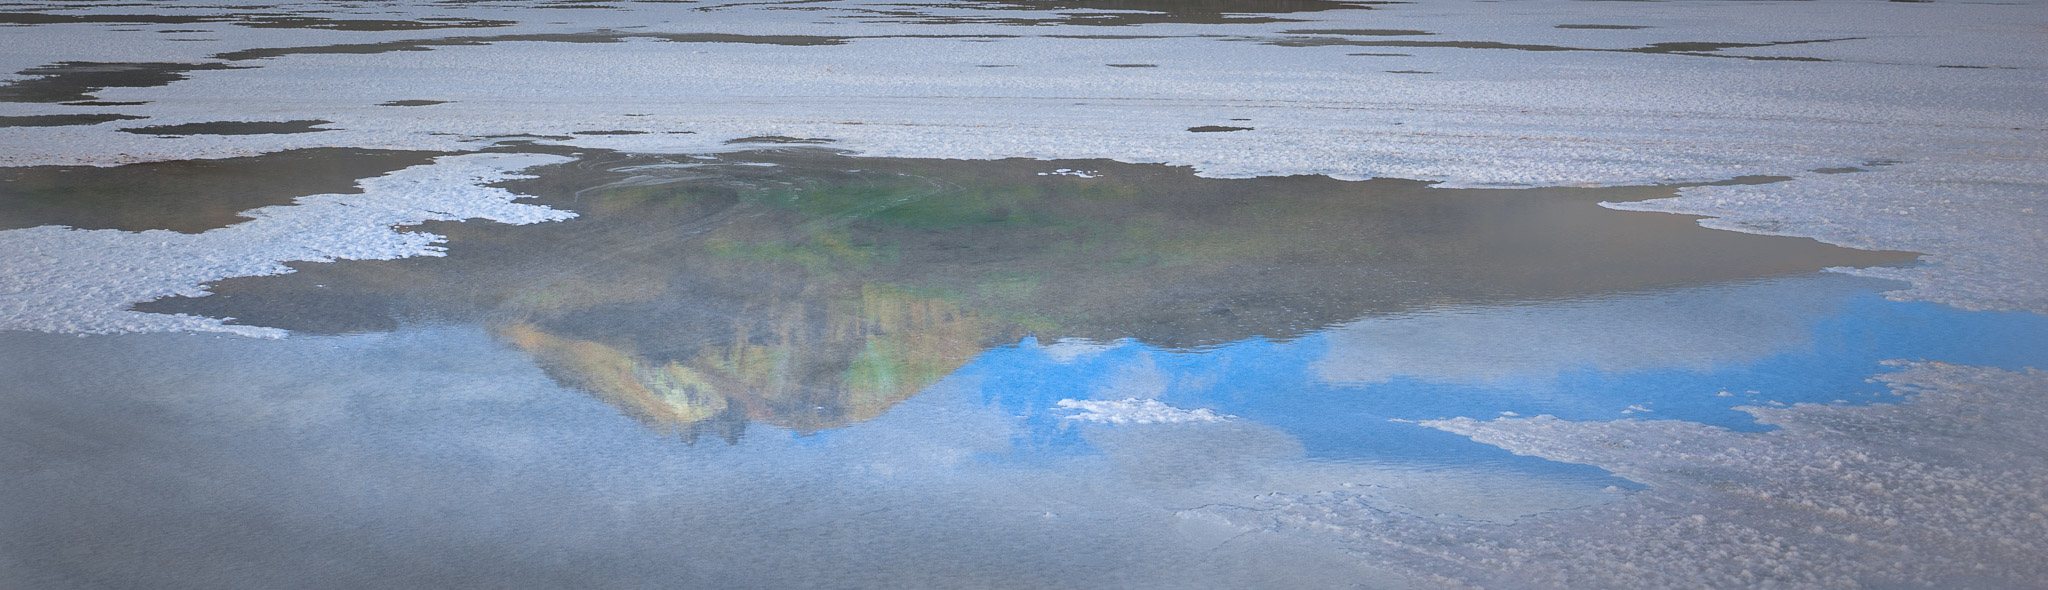 Volcan Tunupa reflected in Salar de Uyuni